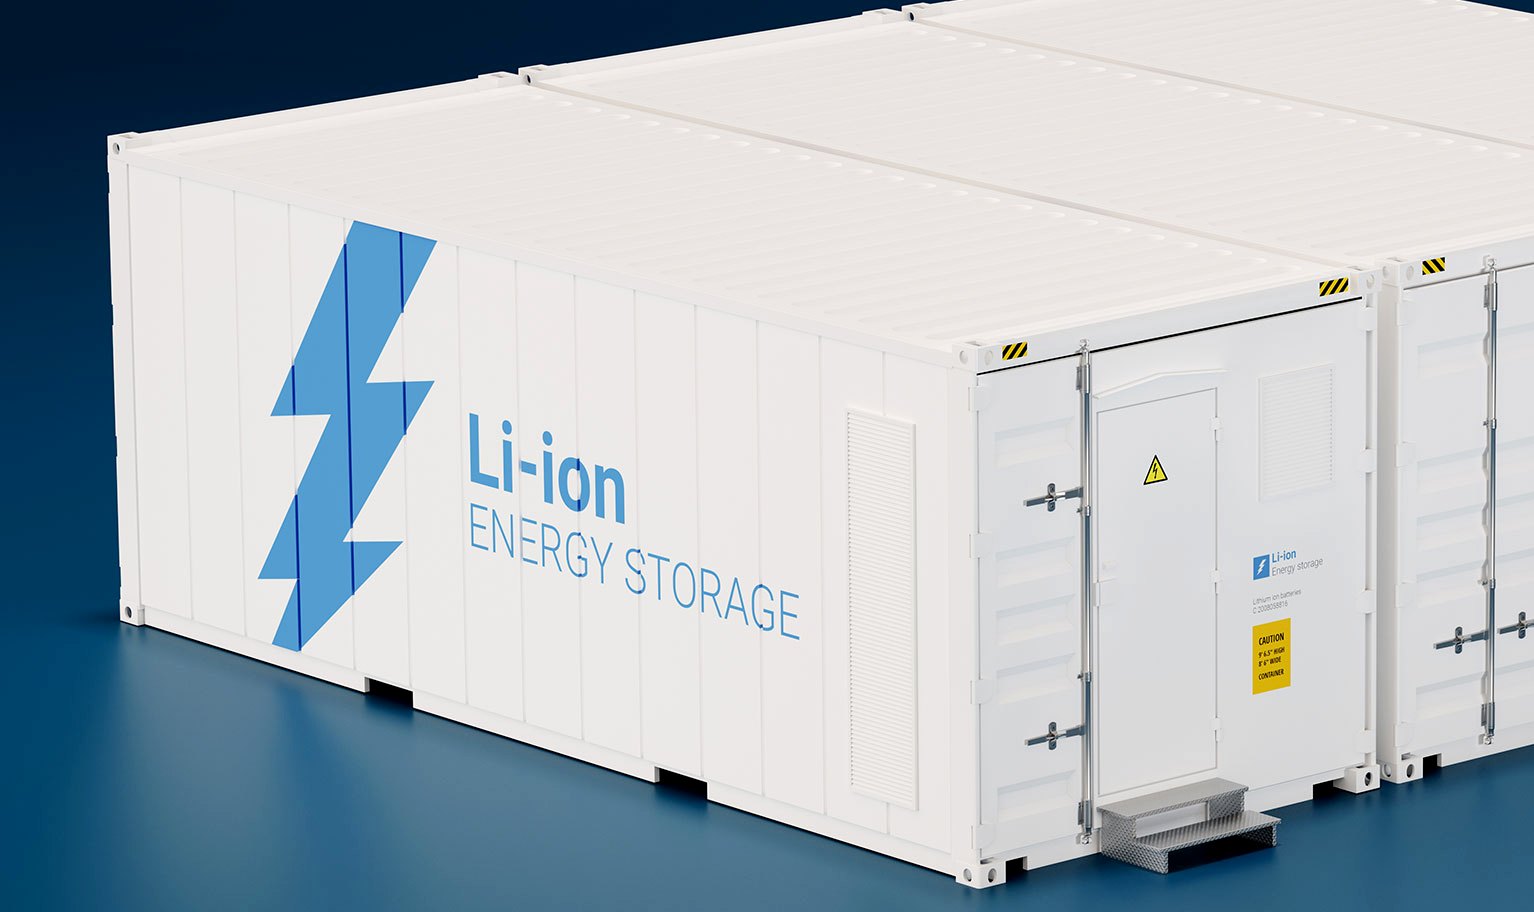 Conventional energy storage via lithoum batteries